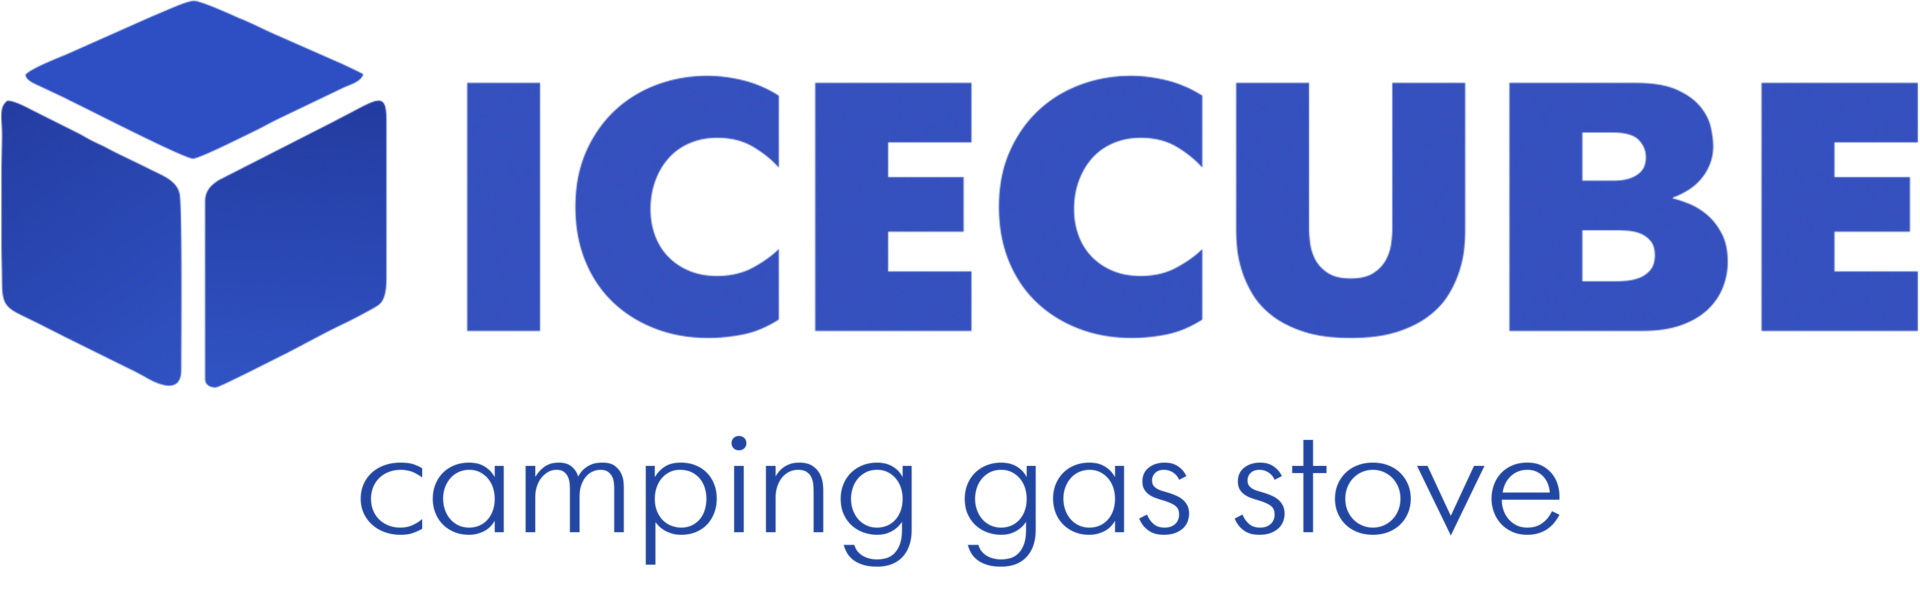 логотип ICECUBE gas.png